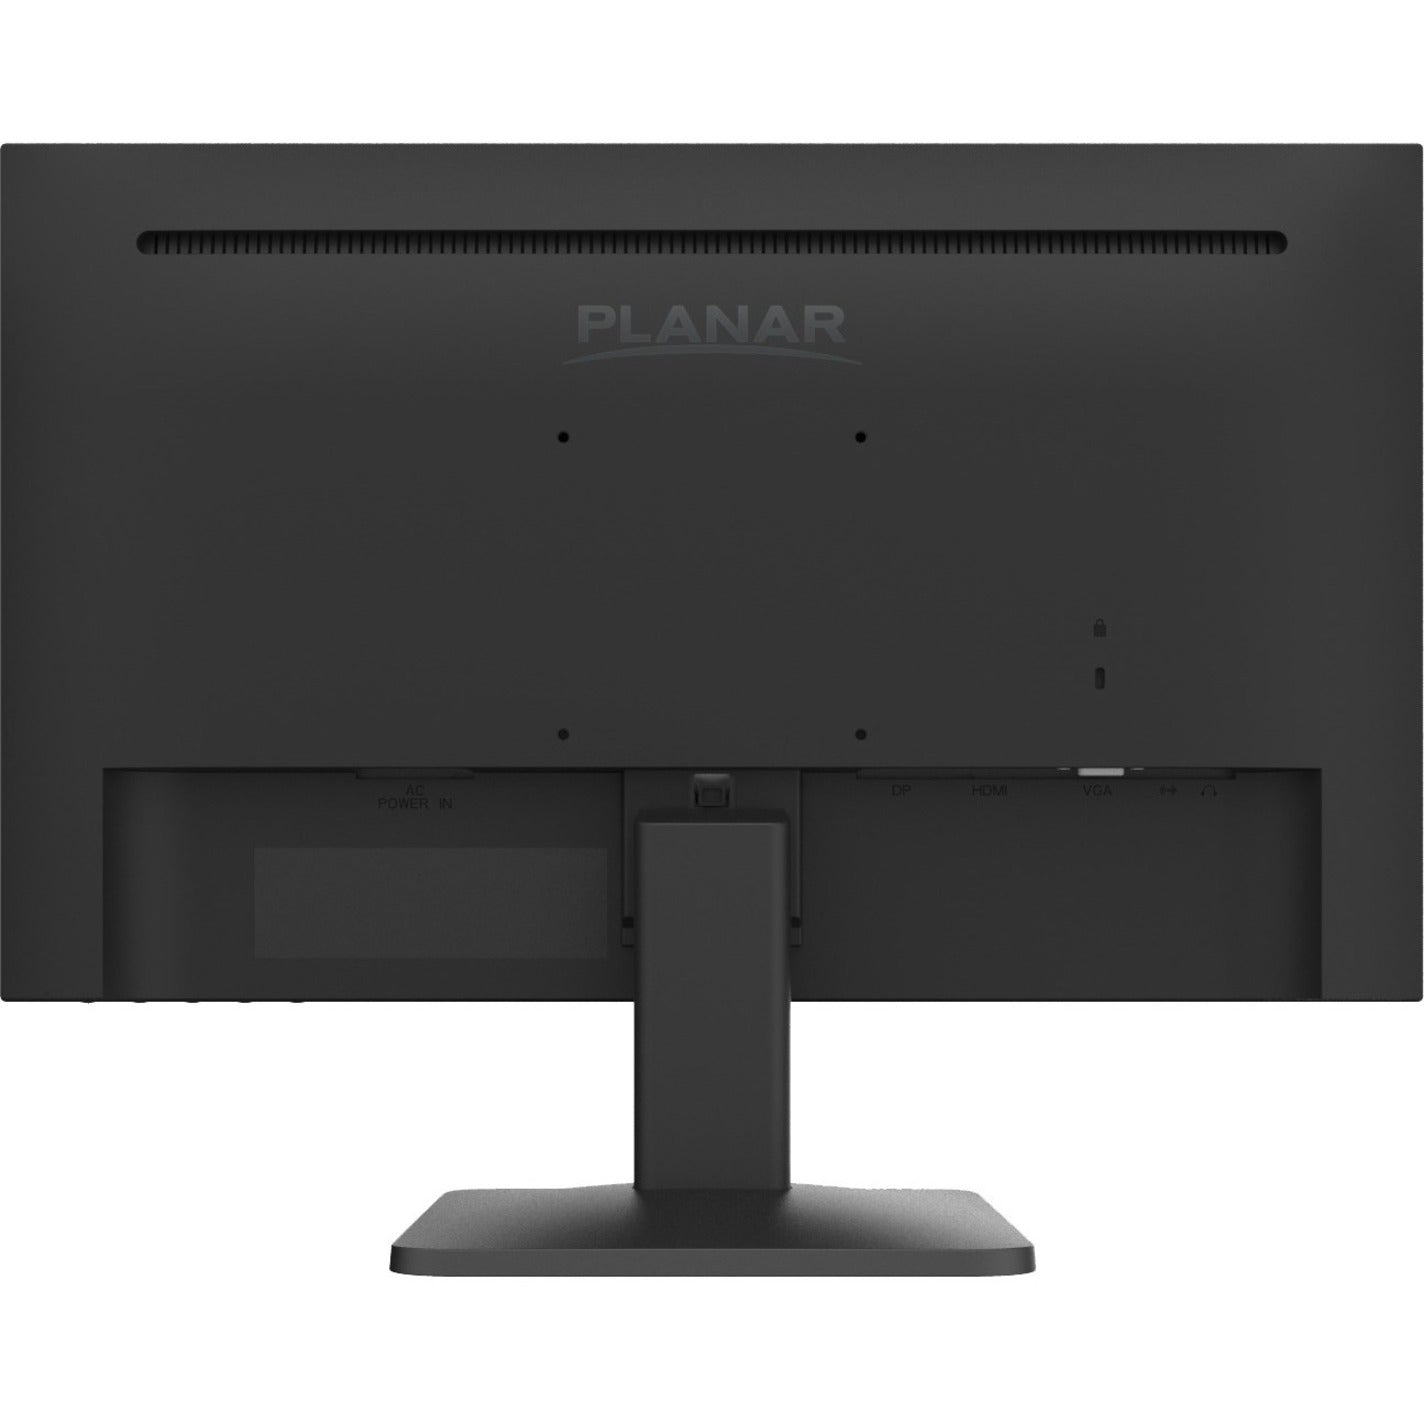 Planar 998-2120-00 PXN2200 22" LCD Monitor, Full HD, Narrow Bezel, VGA HDMI